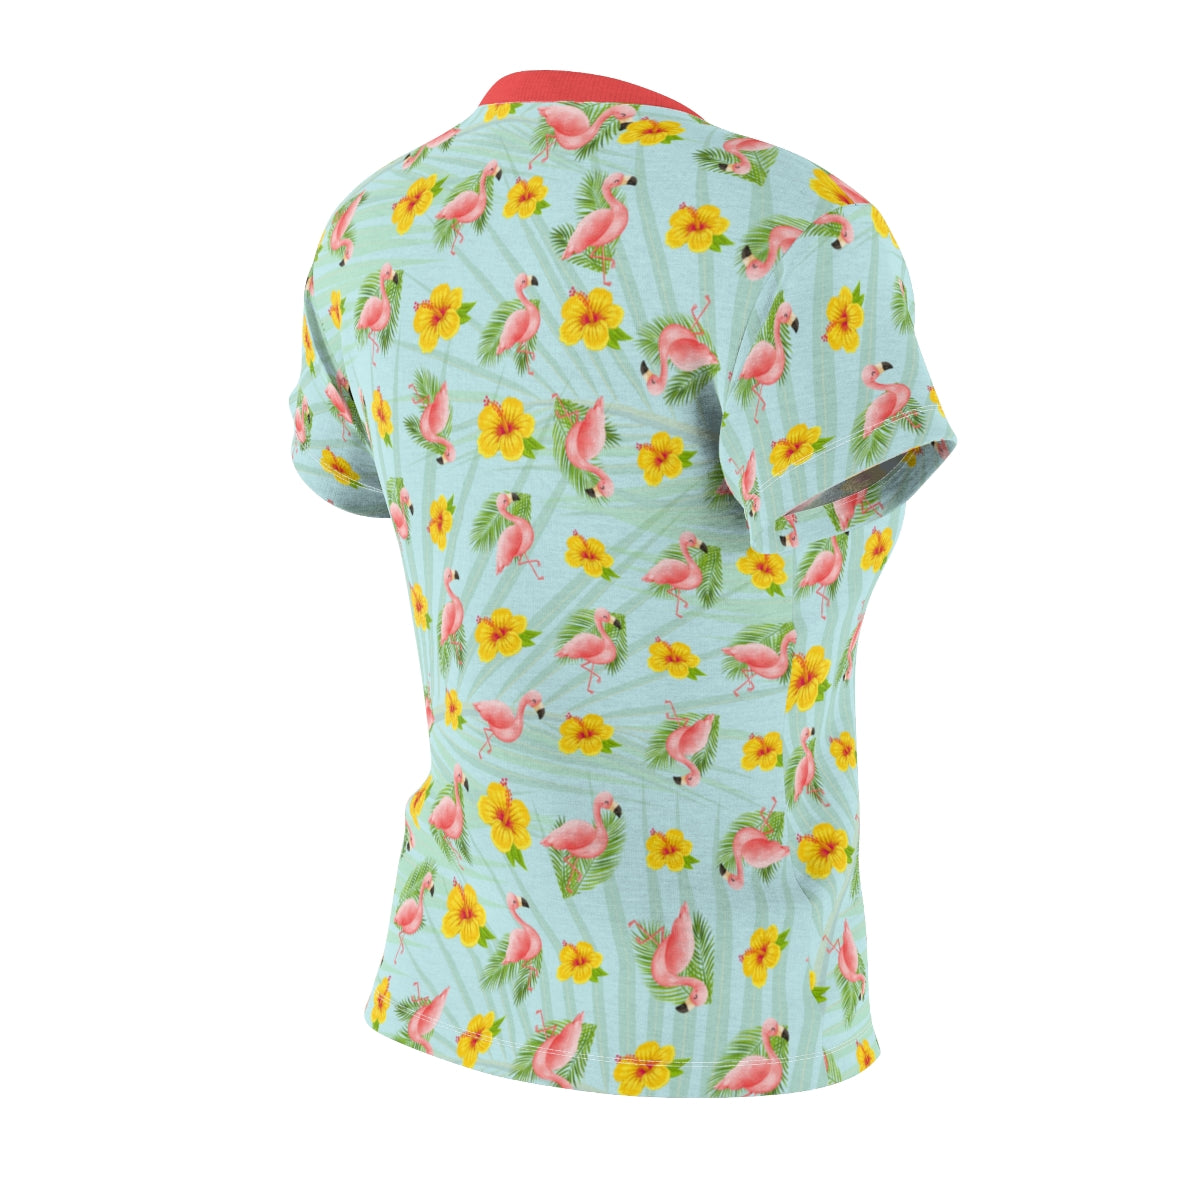 Women's All Over Print - Flamingo Bingo Lightweight Short Sleeve Activewear Jersey - Moisture Wicking - Quick Dry